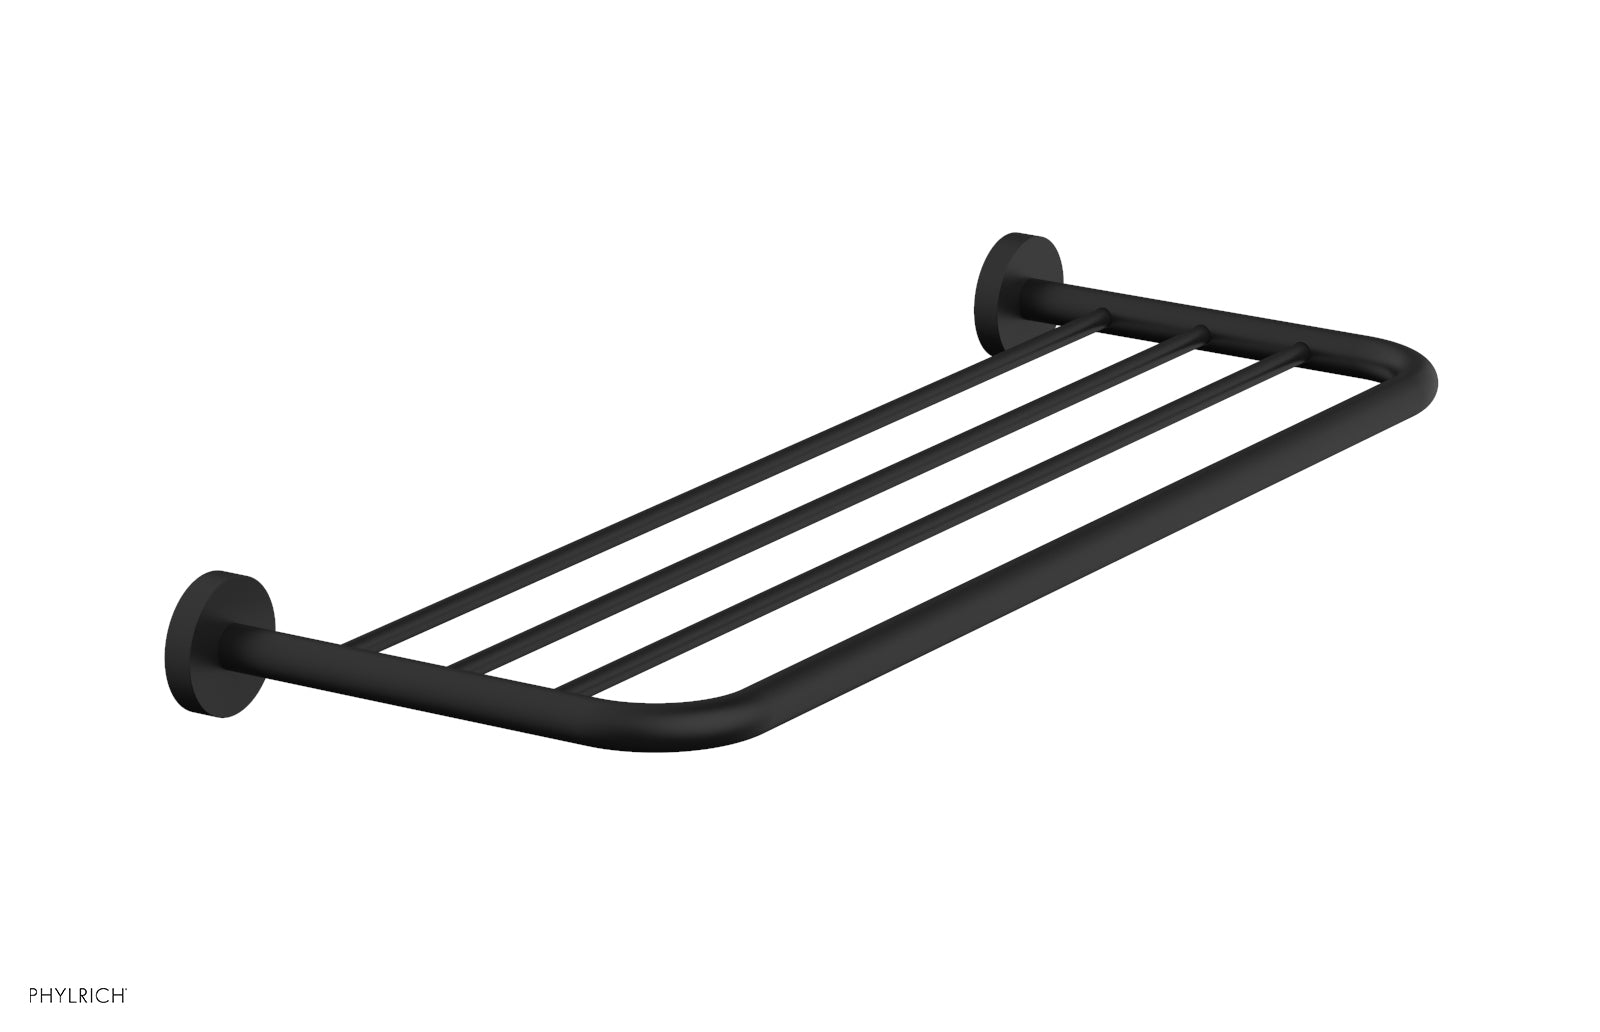 Phylrich BASIC Towel Rack/Shelf